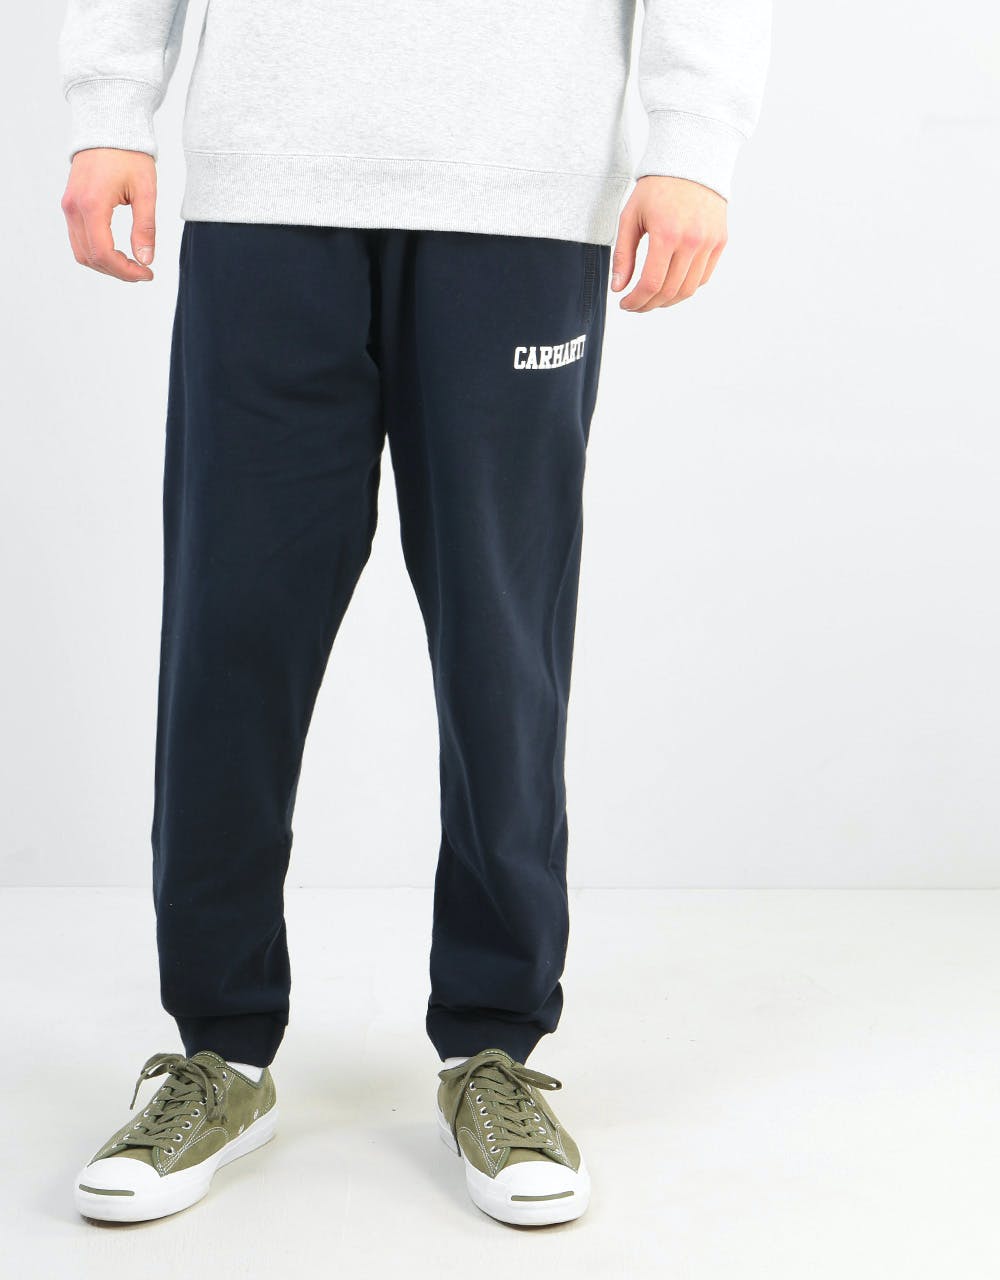 Carhartt WIP College Sweatpants - Dark Navy/White